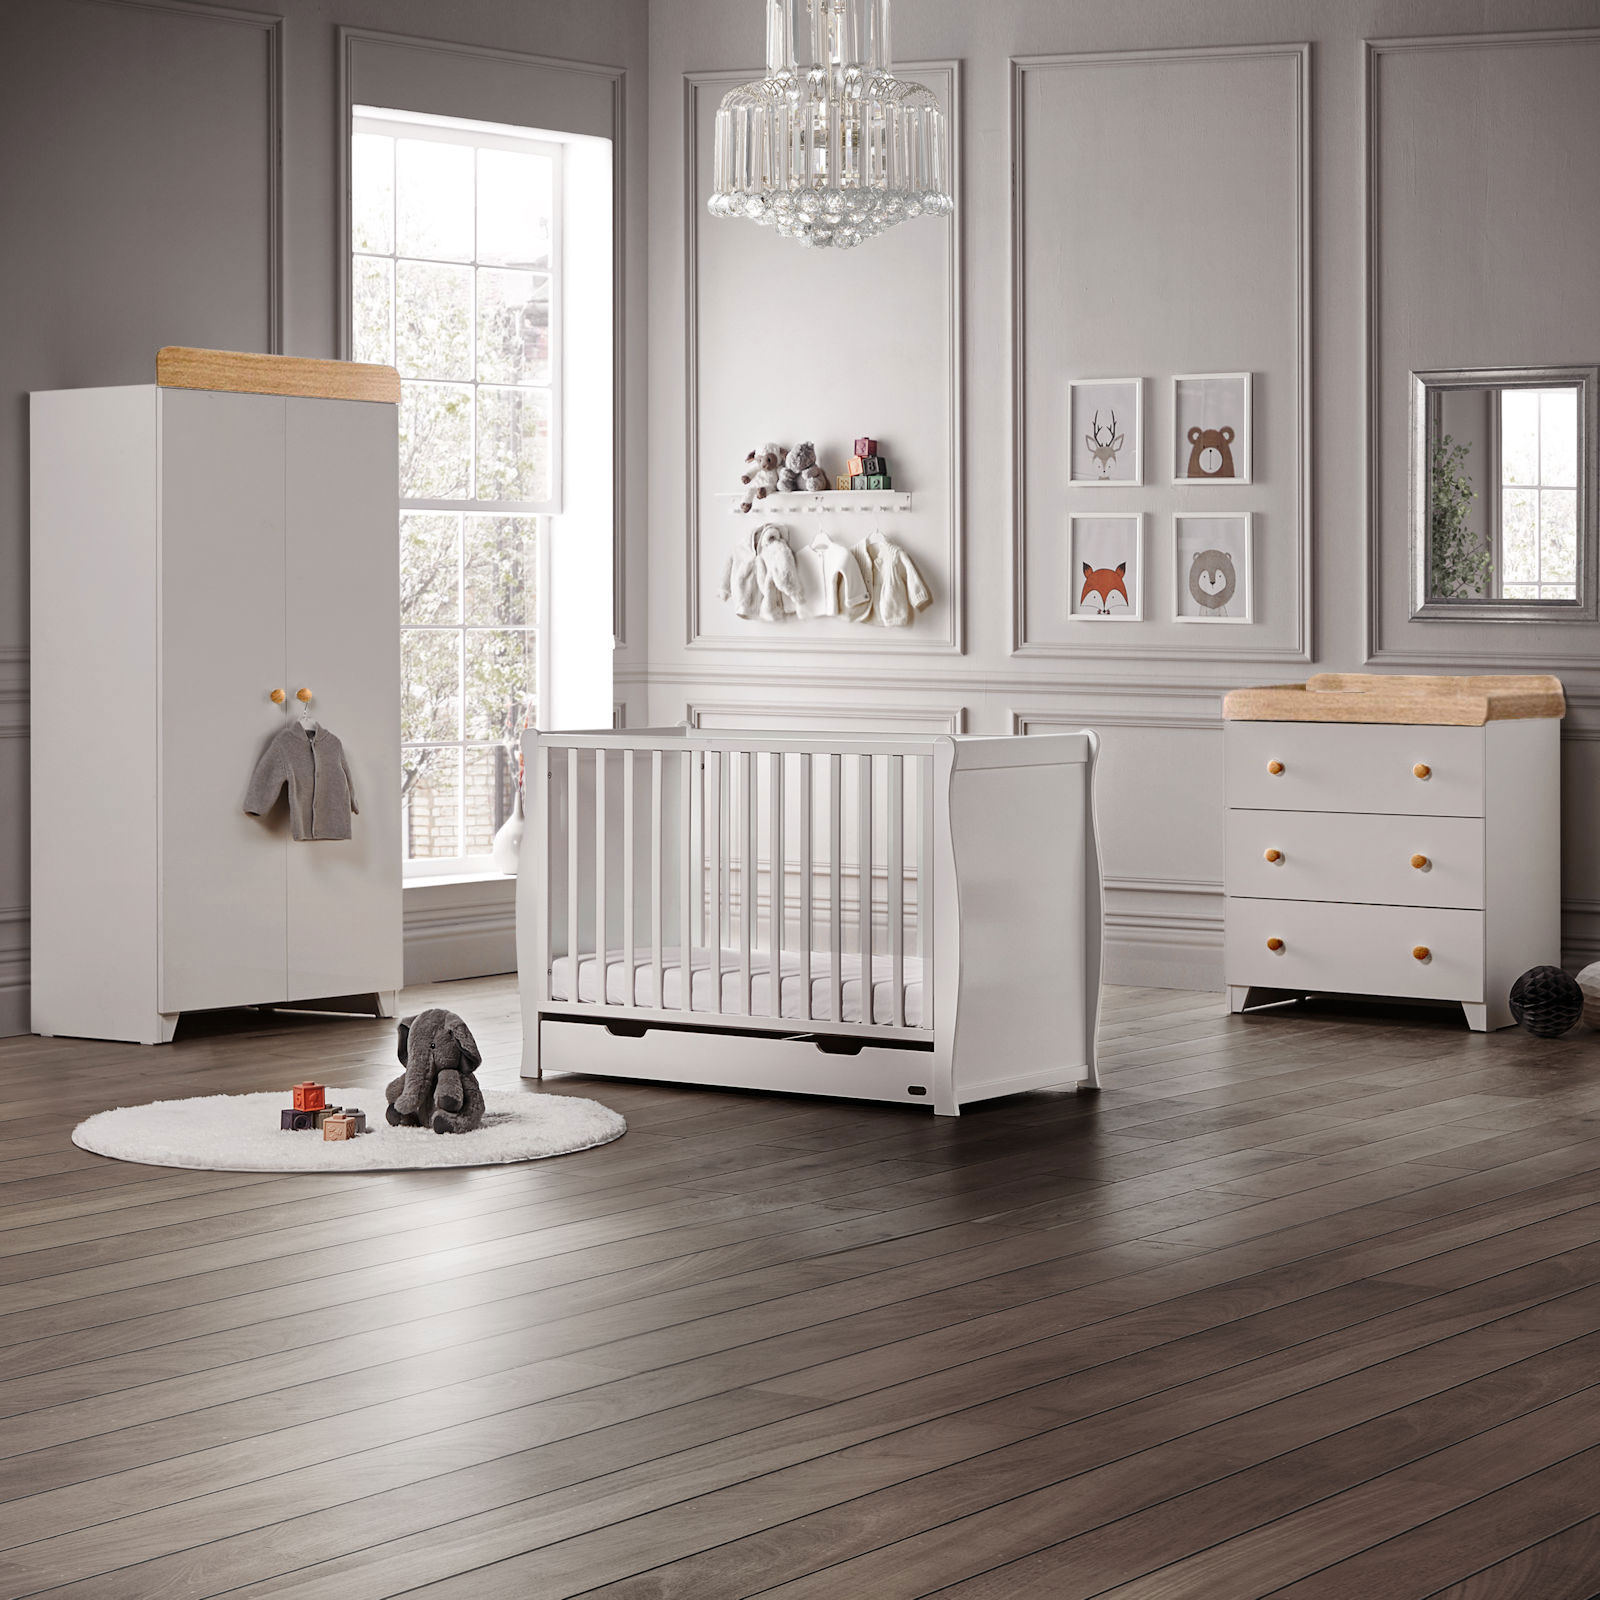 Puggle Chelford Sleigh Cot 6 Piece Nursery Furniture Set With Maxi Air Cool Mattress - White/White & Oak